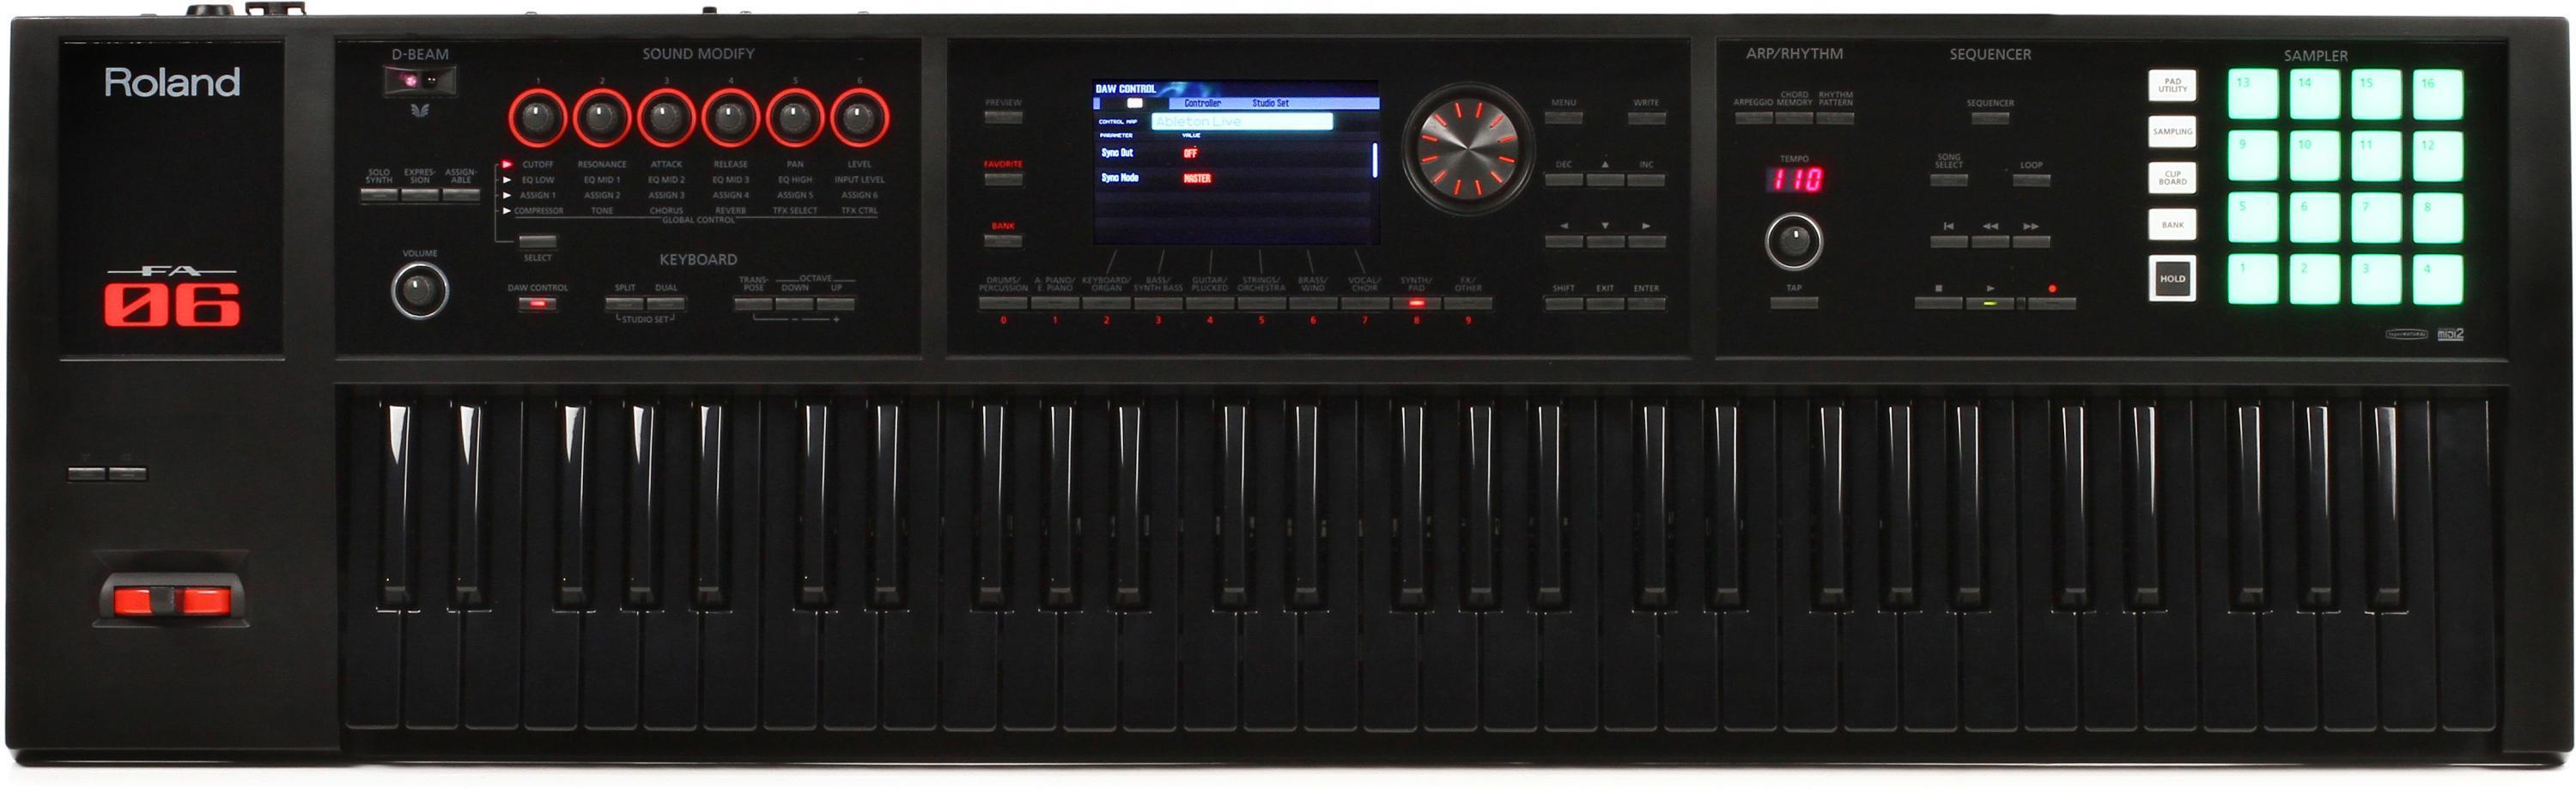 Roland FA-06B 61-key Music Workstation - Limted Edition Black on Black